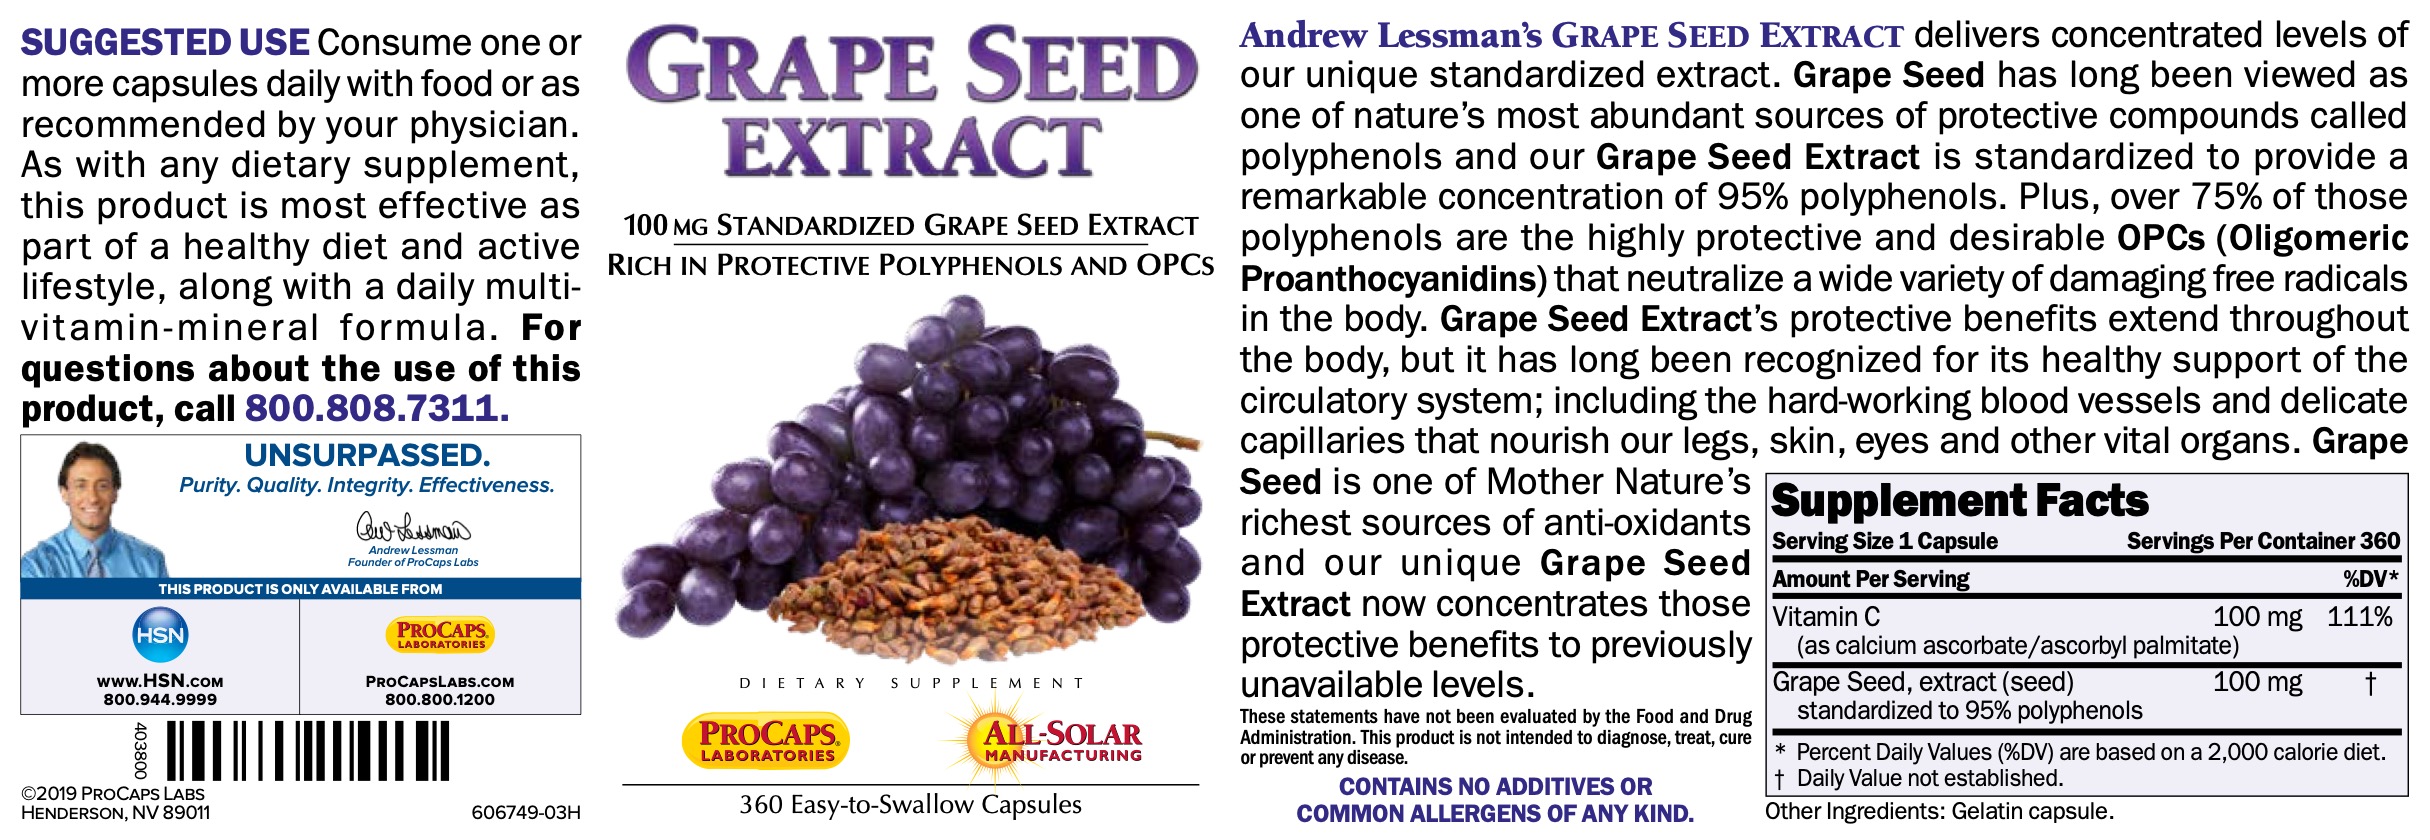 Grape-Seed-Extract-Capsules-Anti-oxidants